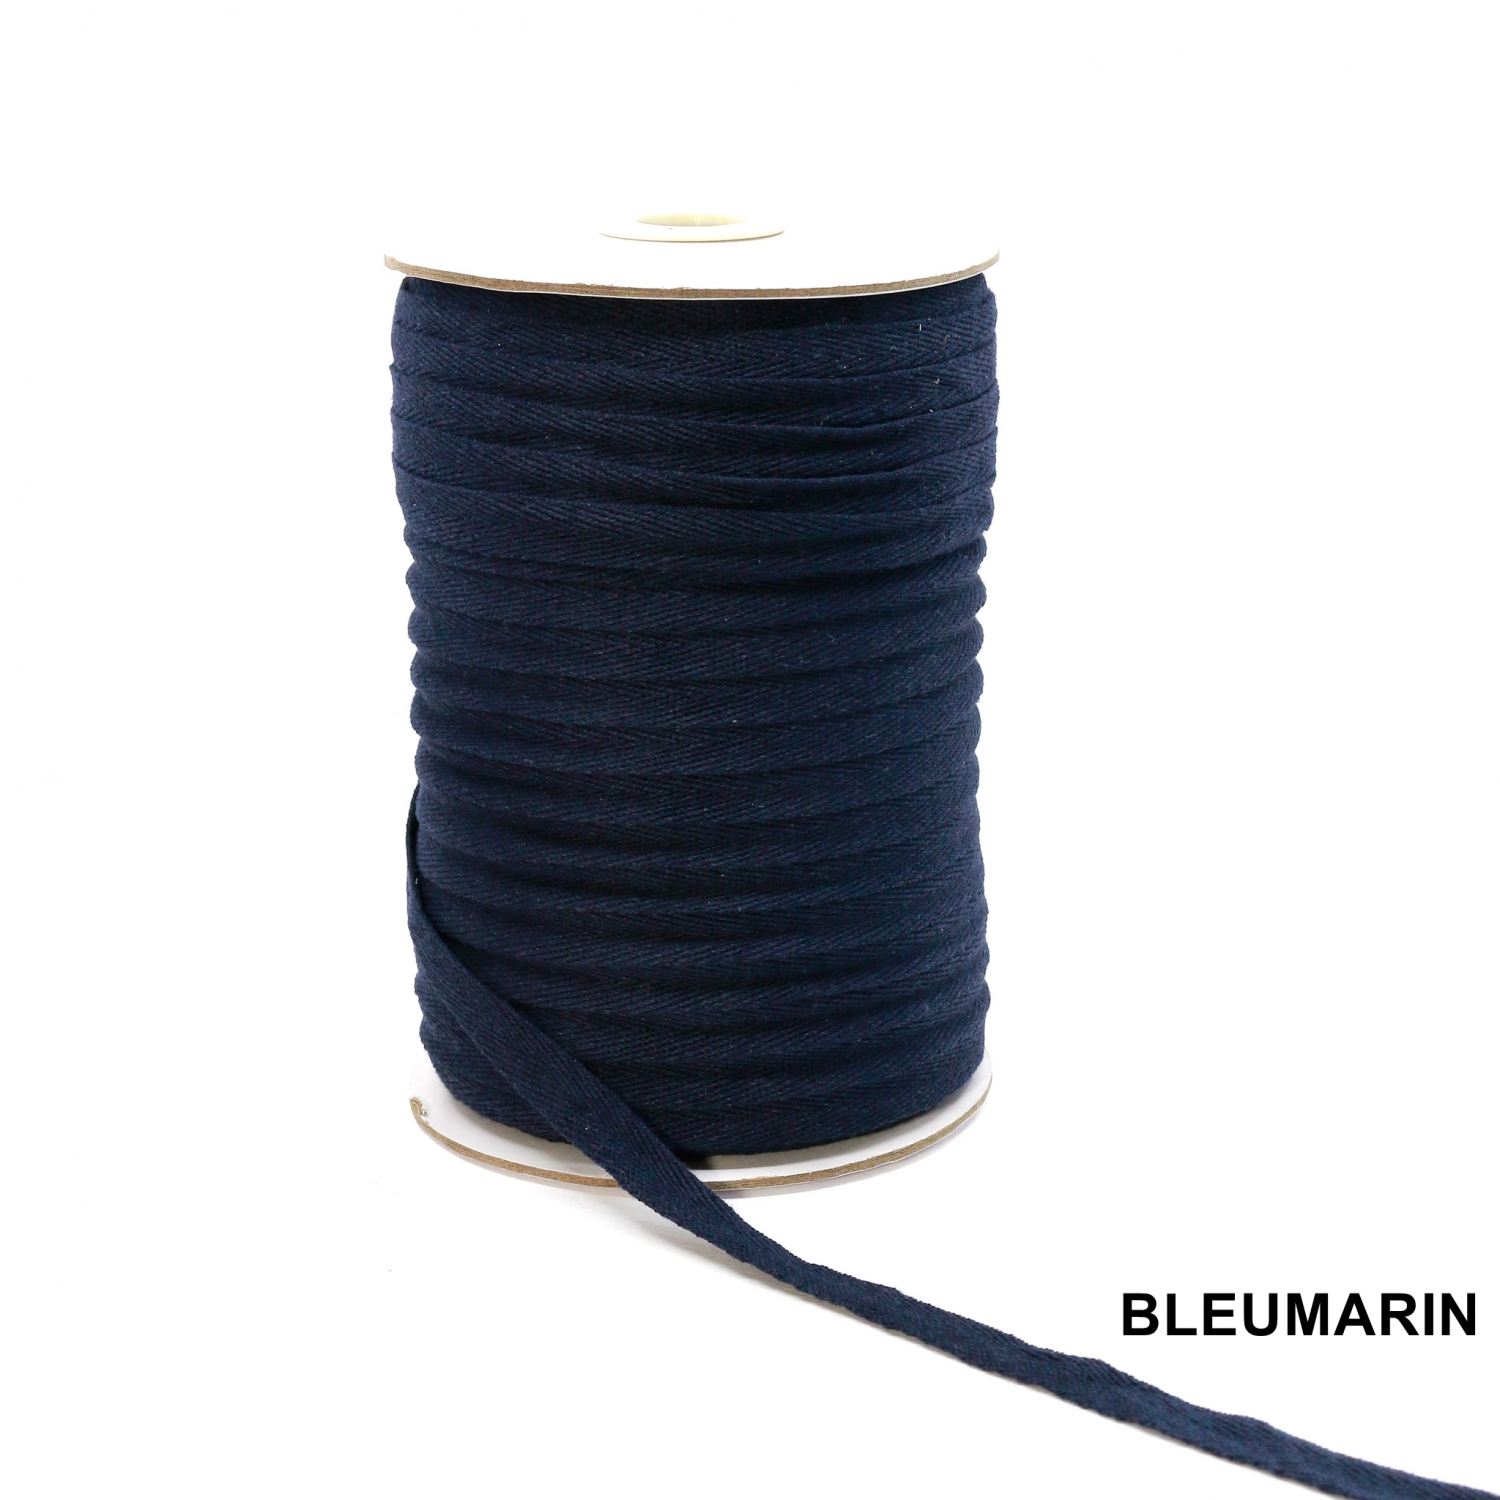 Banda Decorativa Bumbac, Herringbone, Bleumarin, latime 10 mm (100 metri/rola)